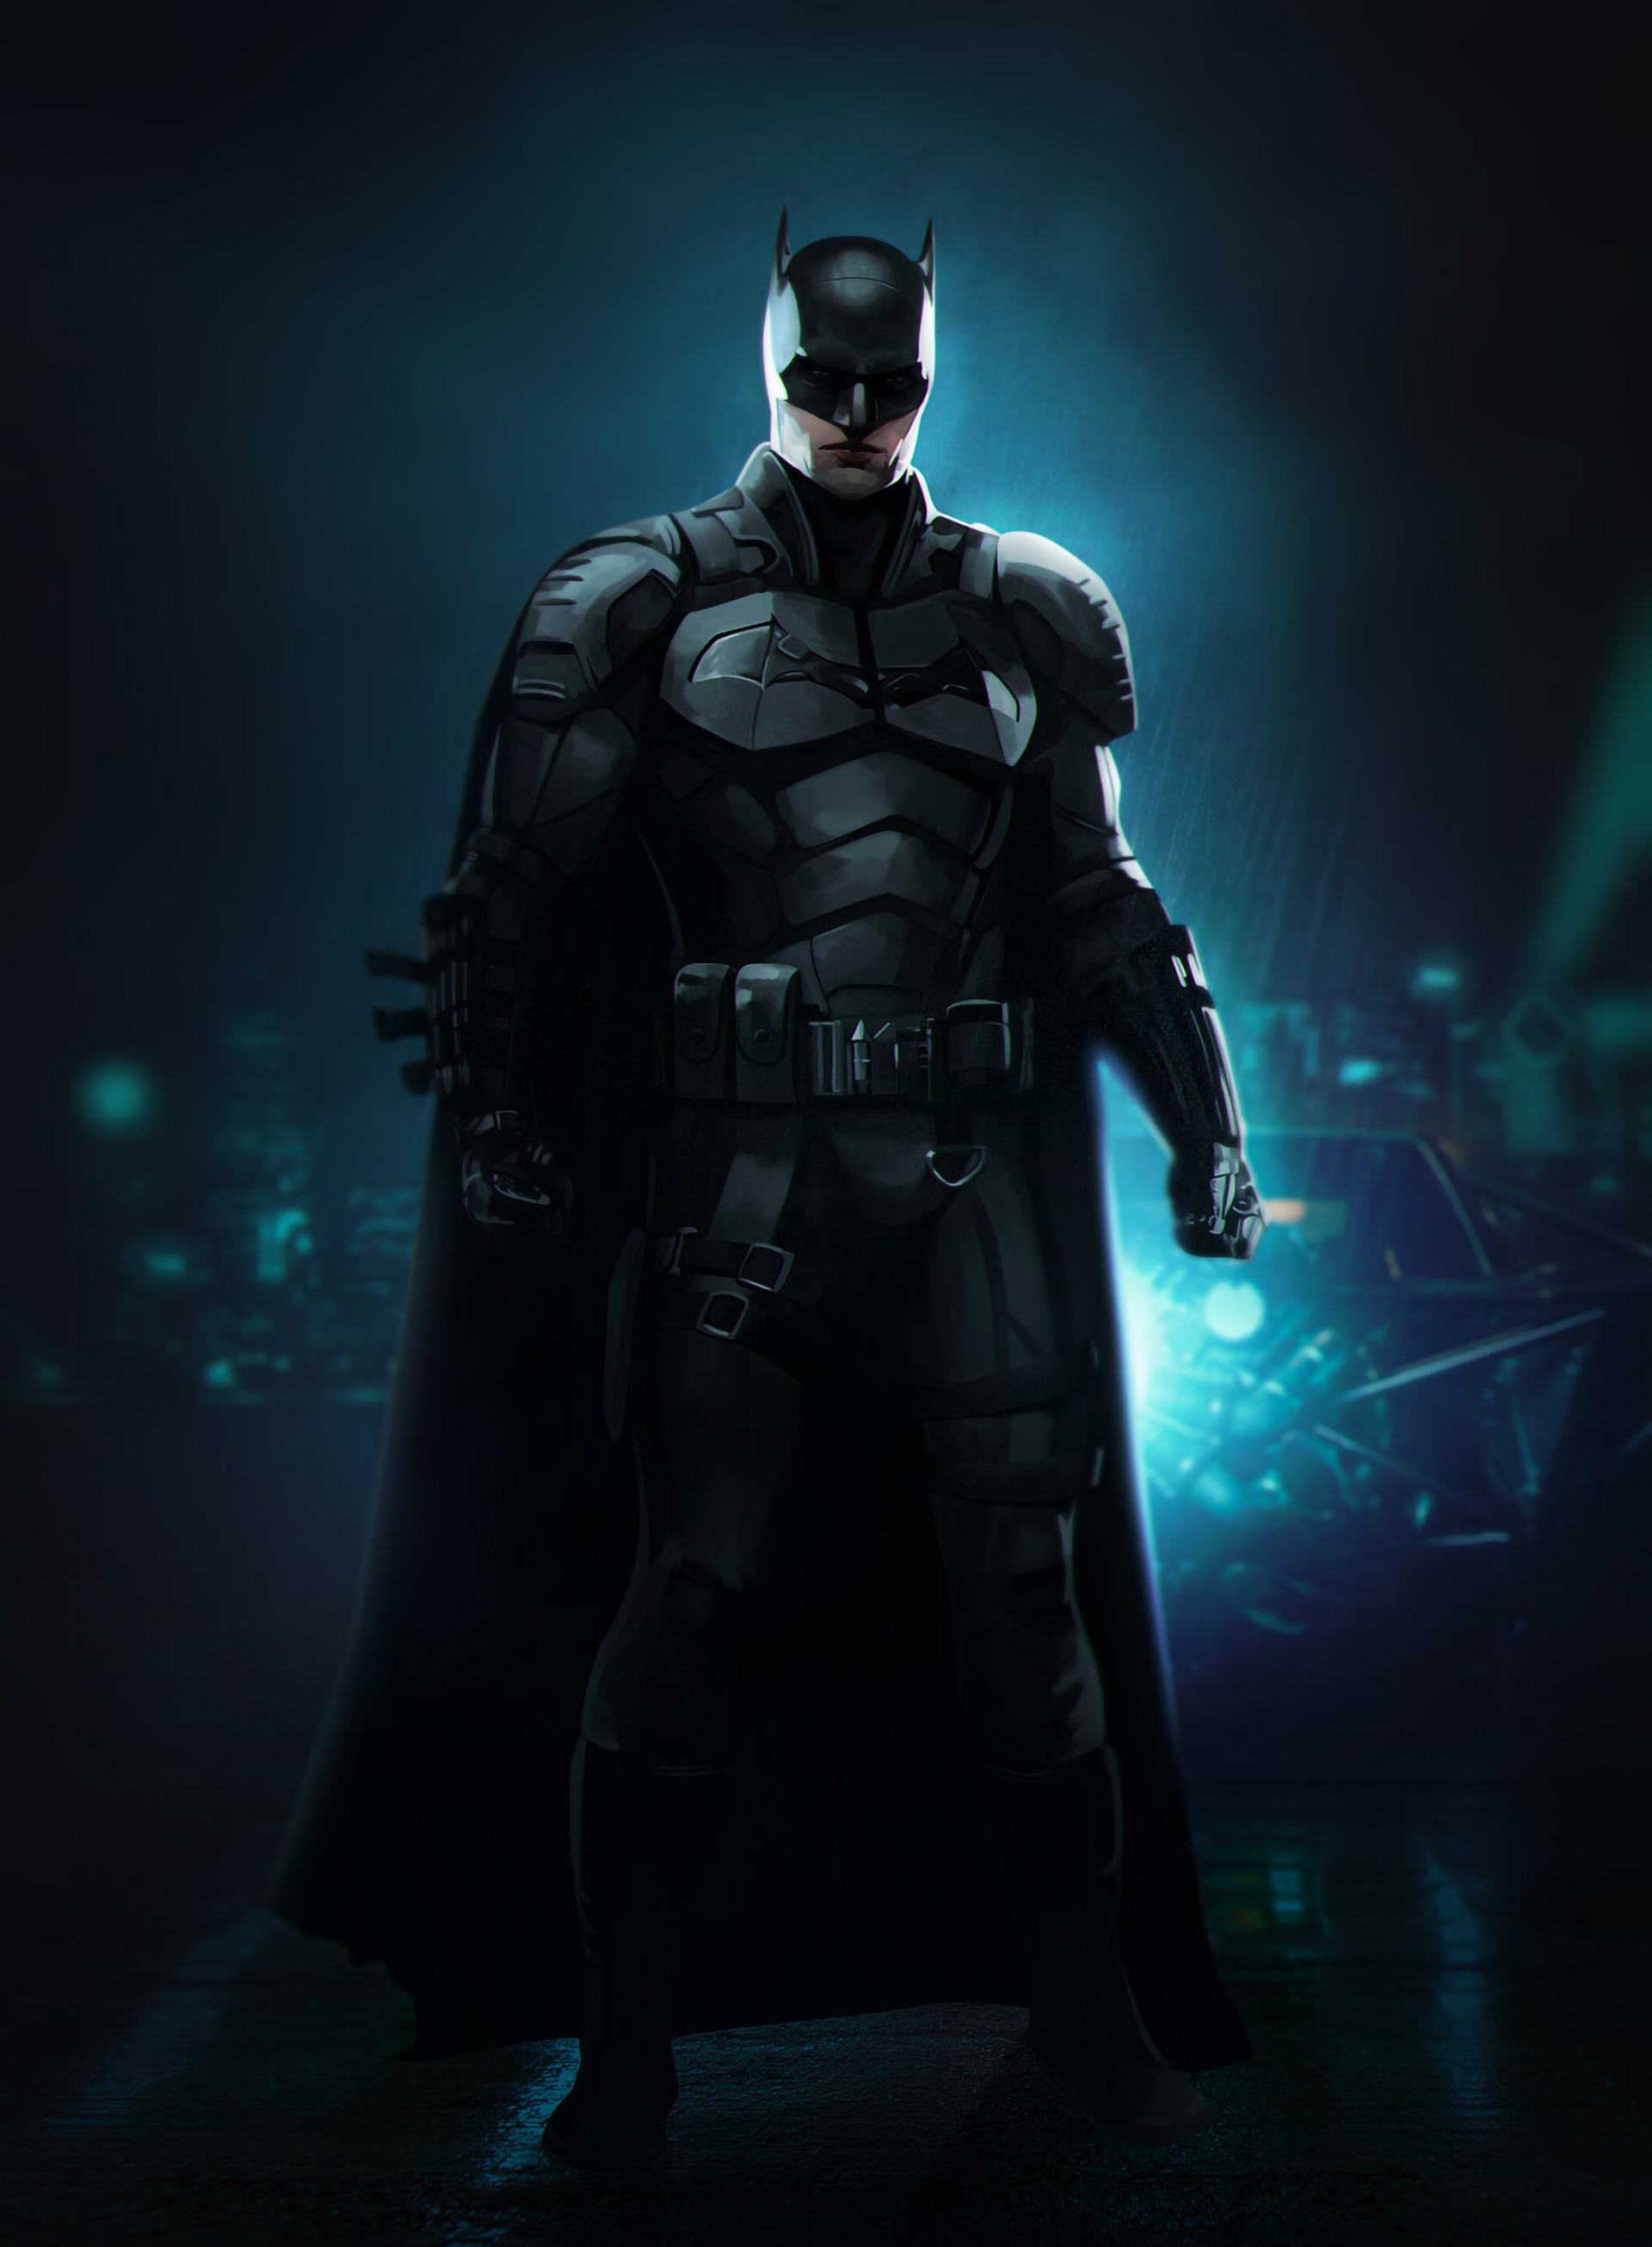 The Batman Wallpaper HD by Ruben111416 on DeviantArt